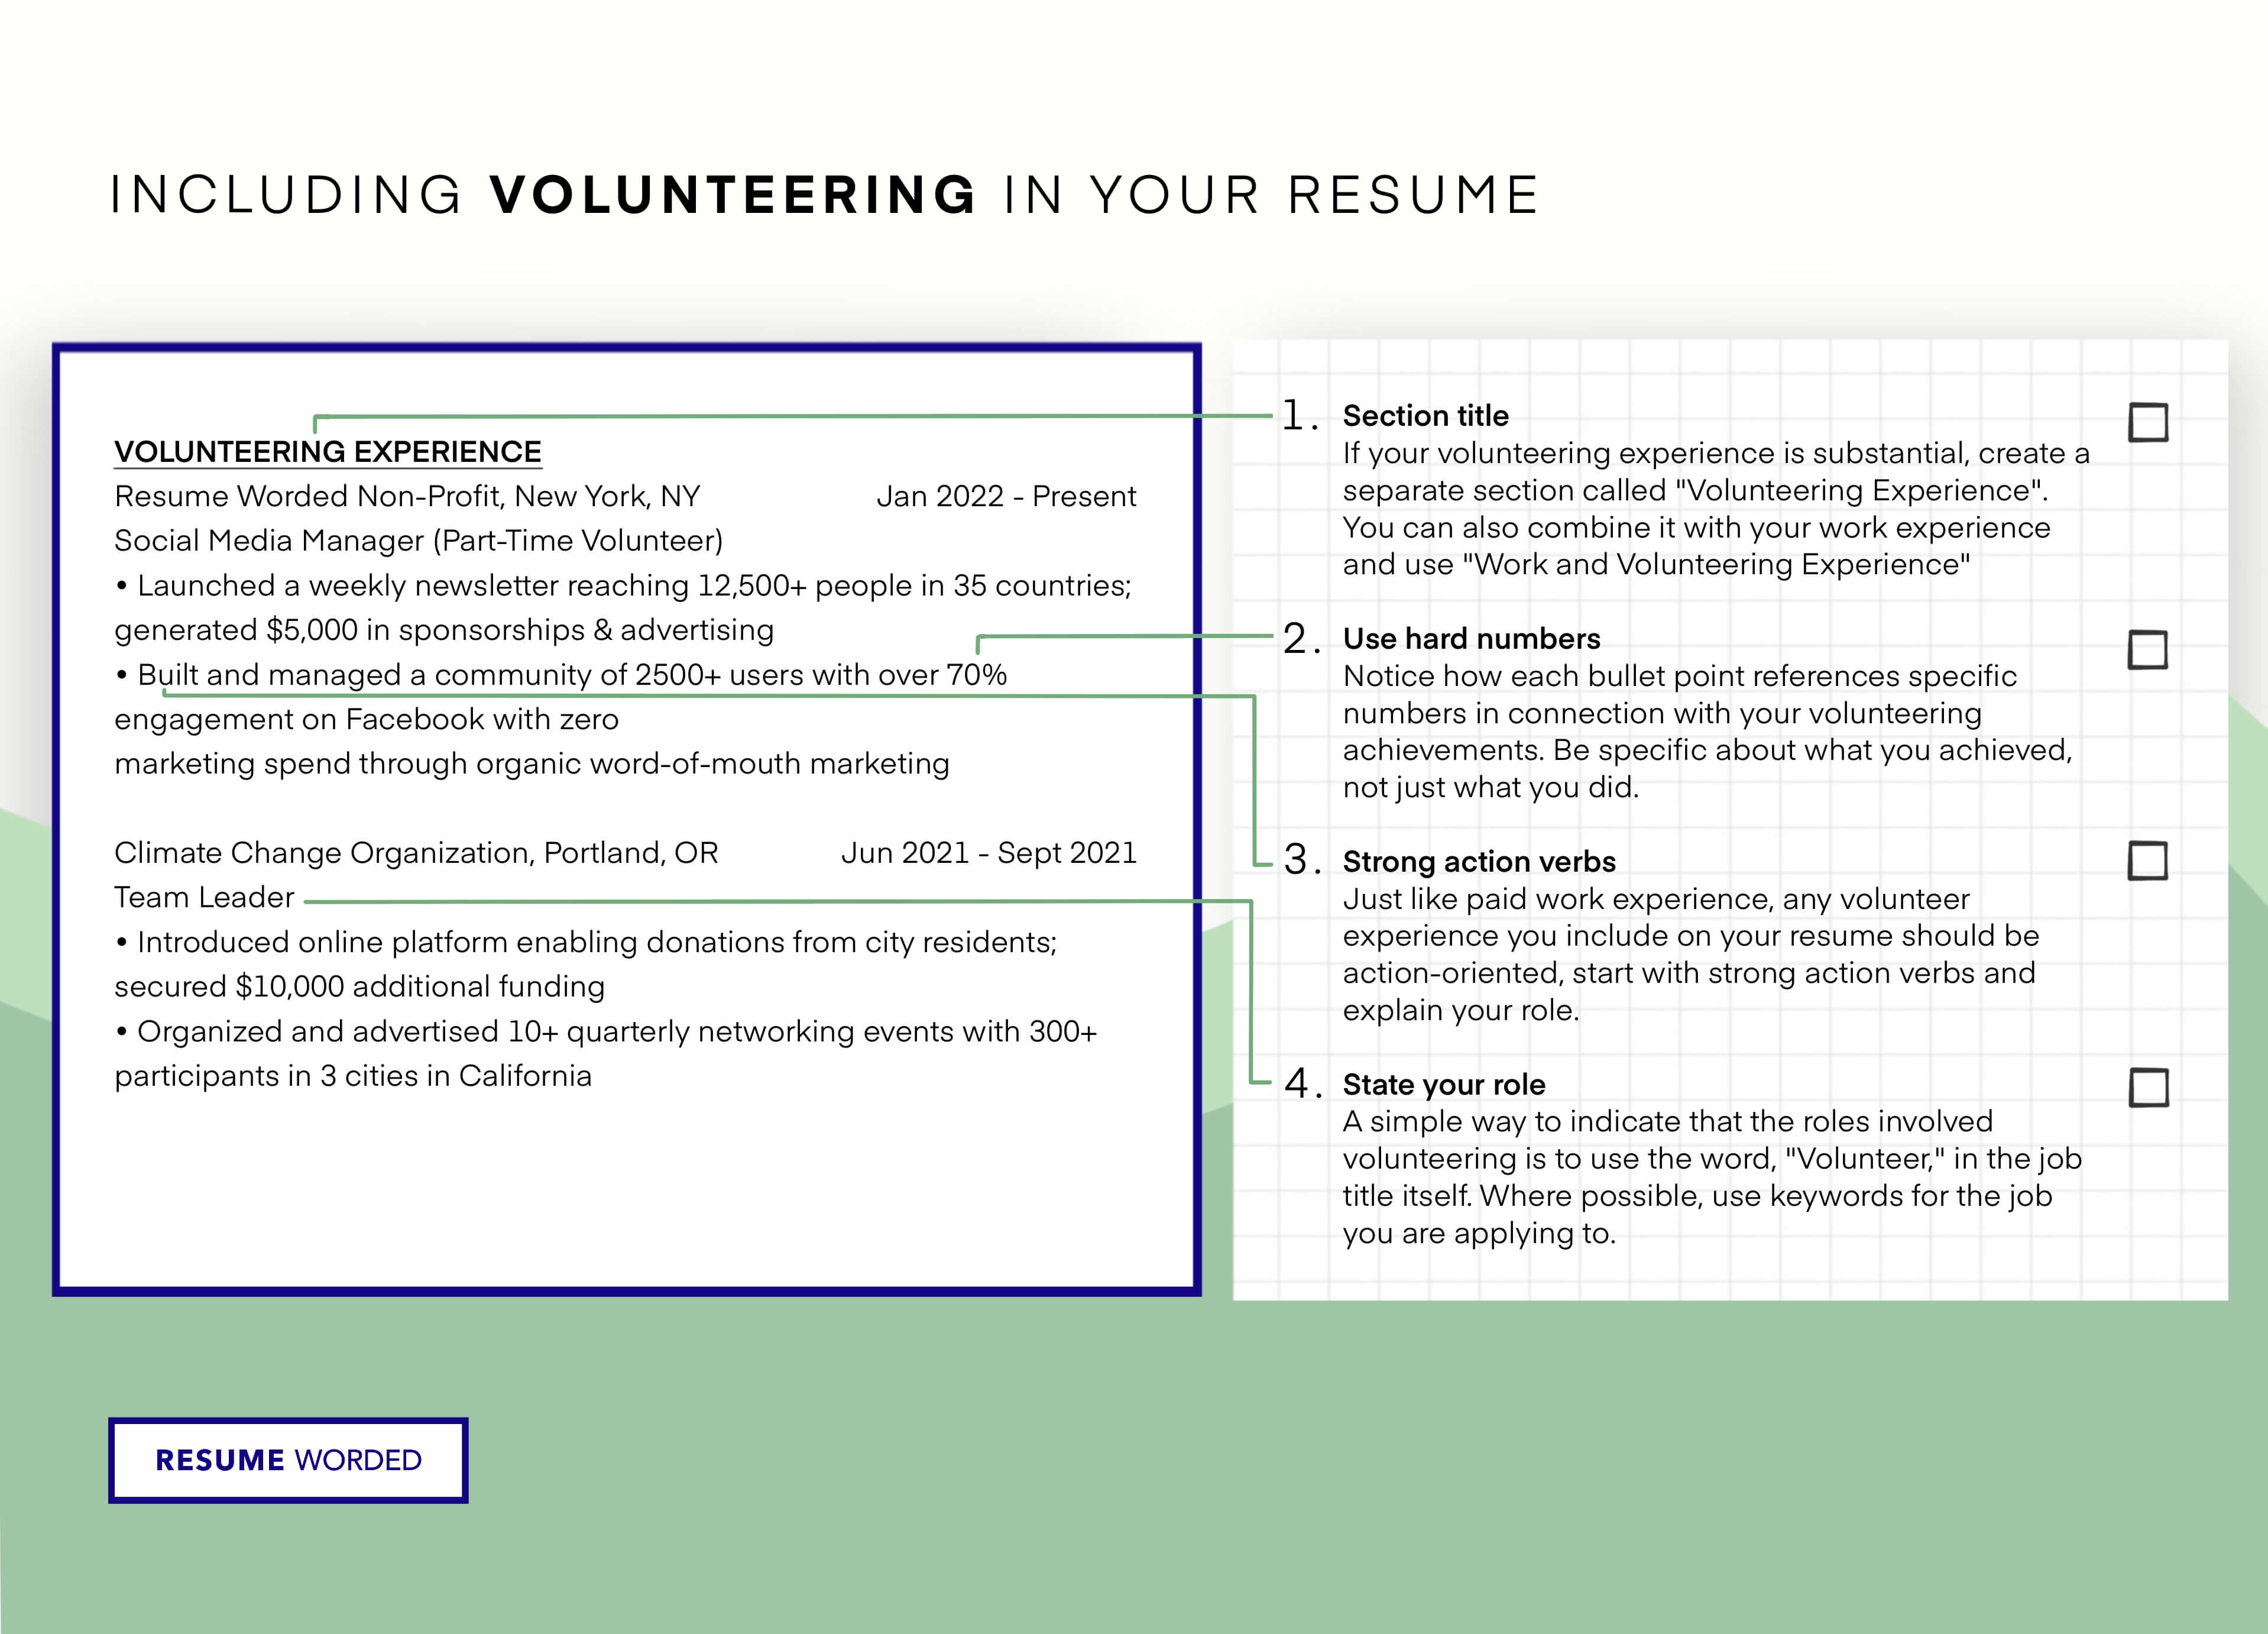 Include relevant volunteering experience. - Entry Level Environmental Engineer Resume